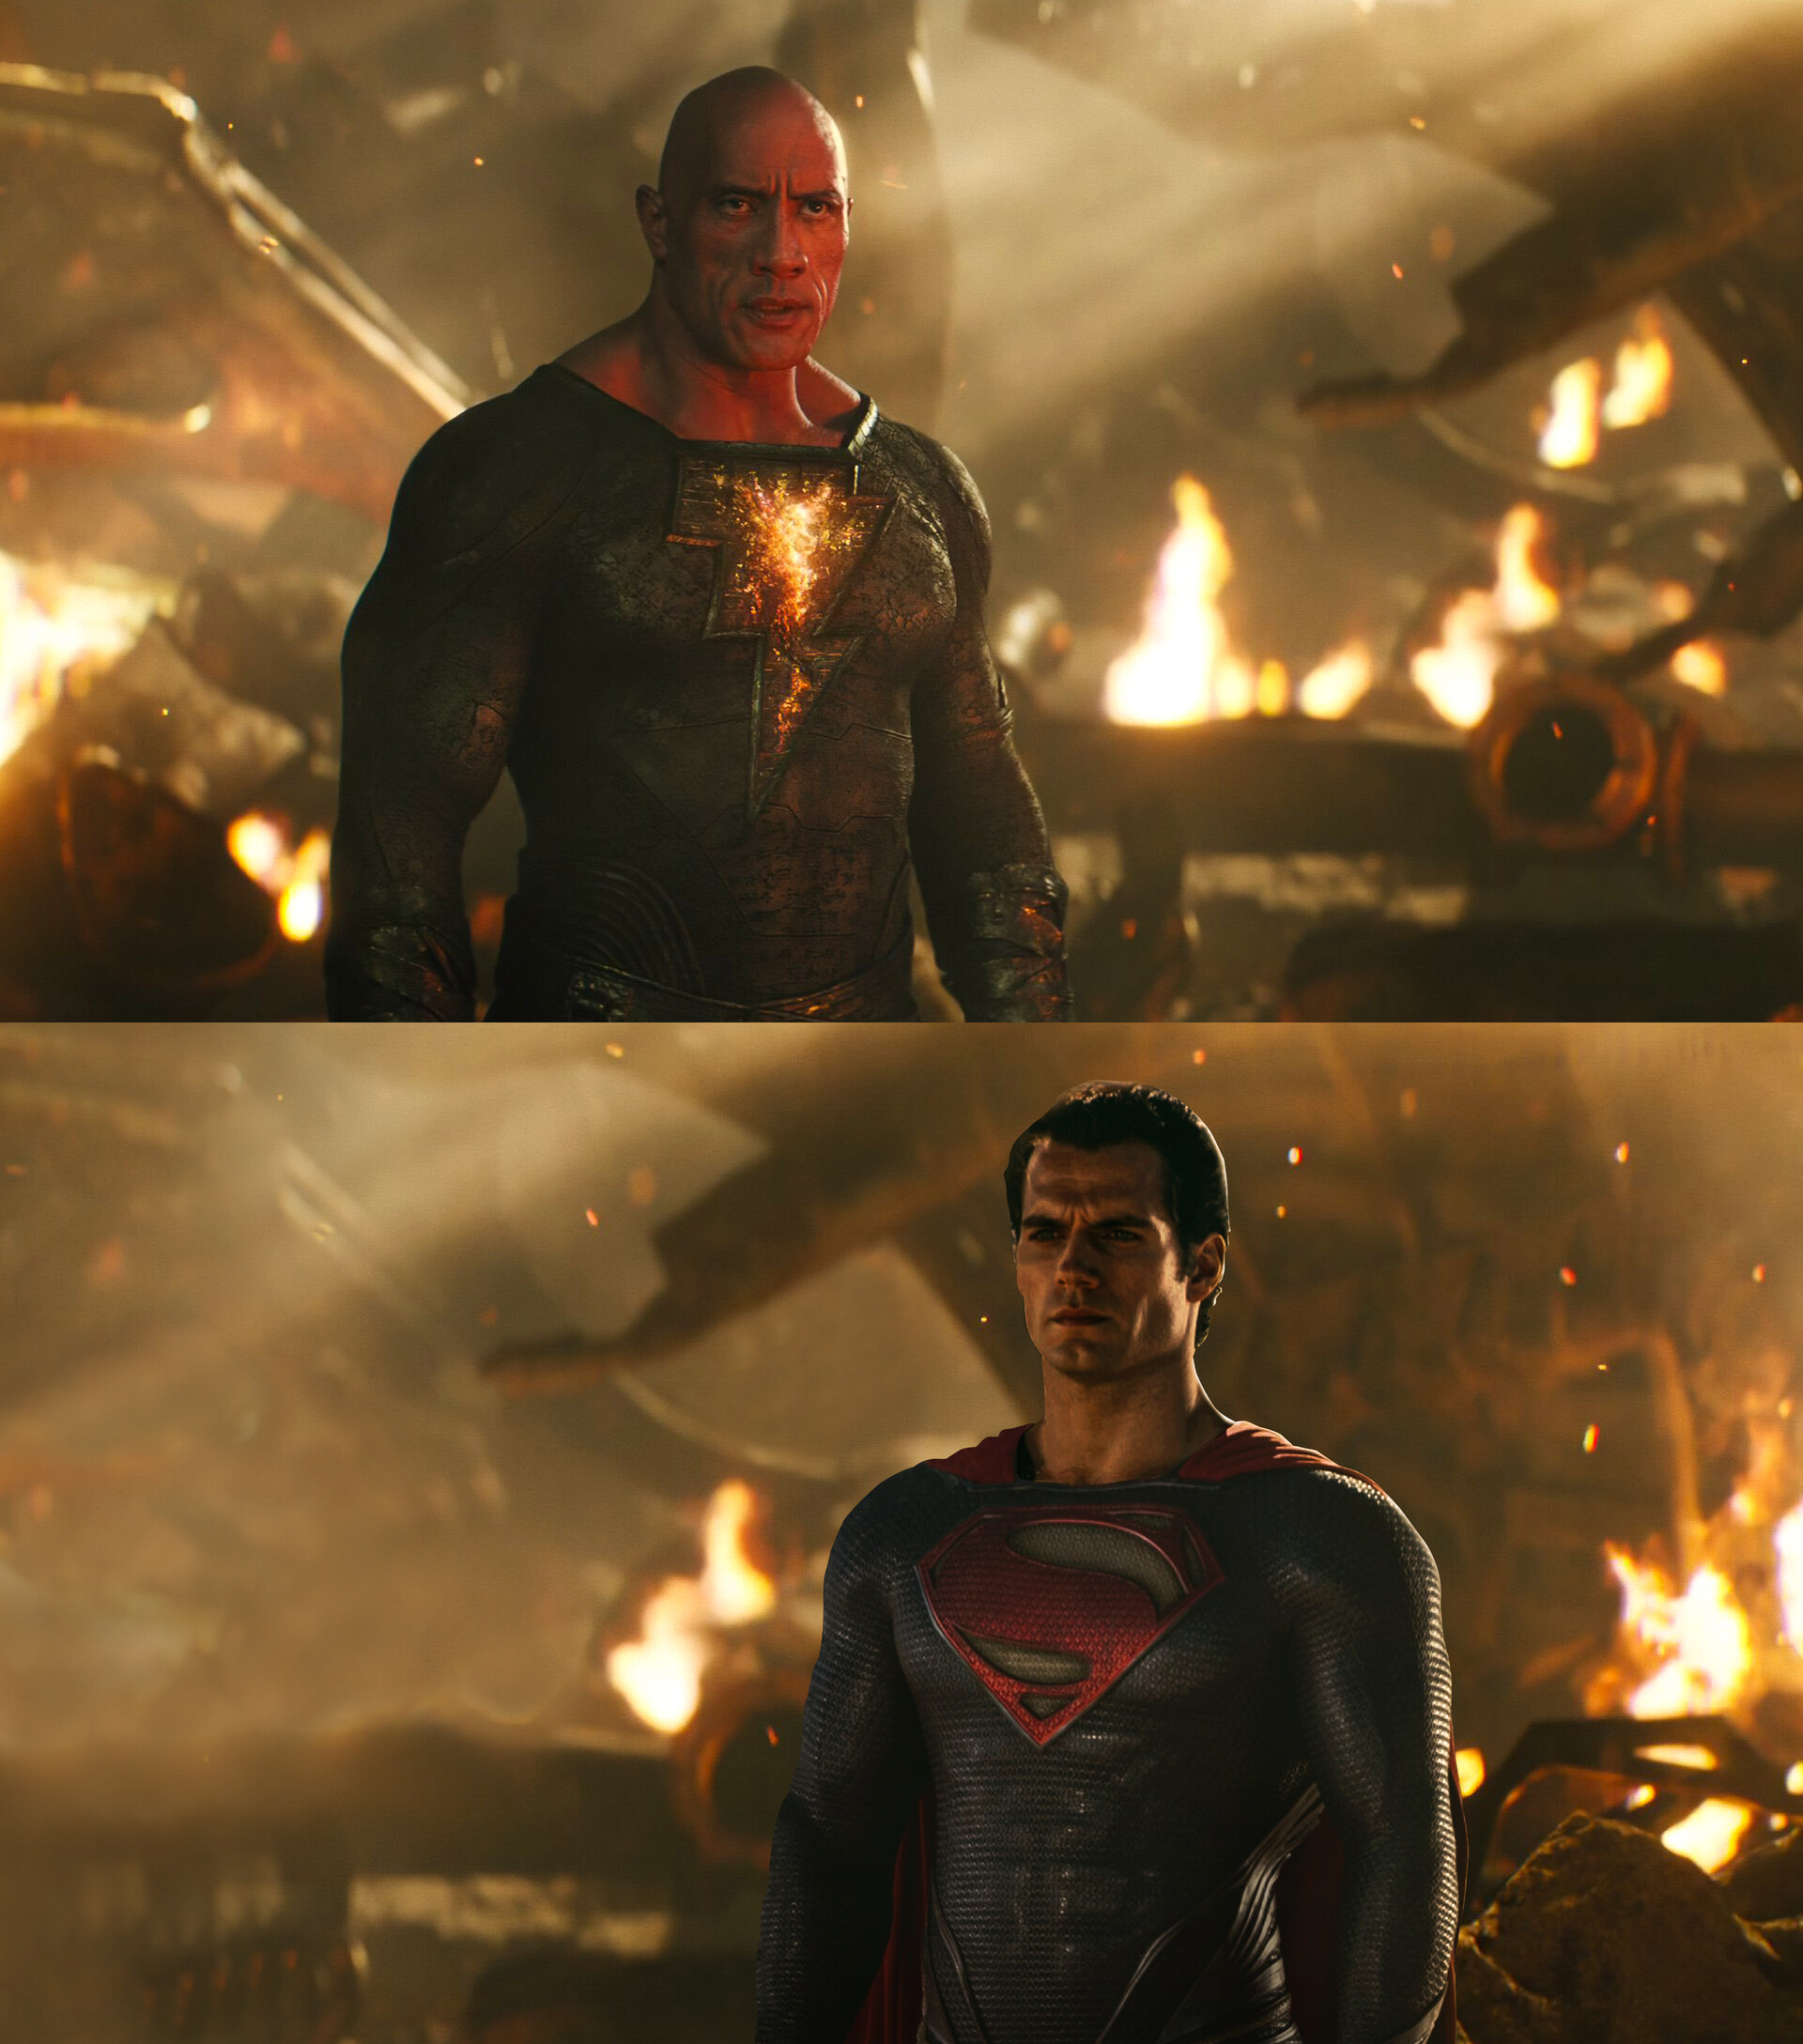 the rock vs Superman.